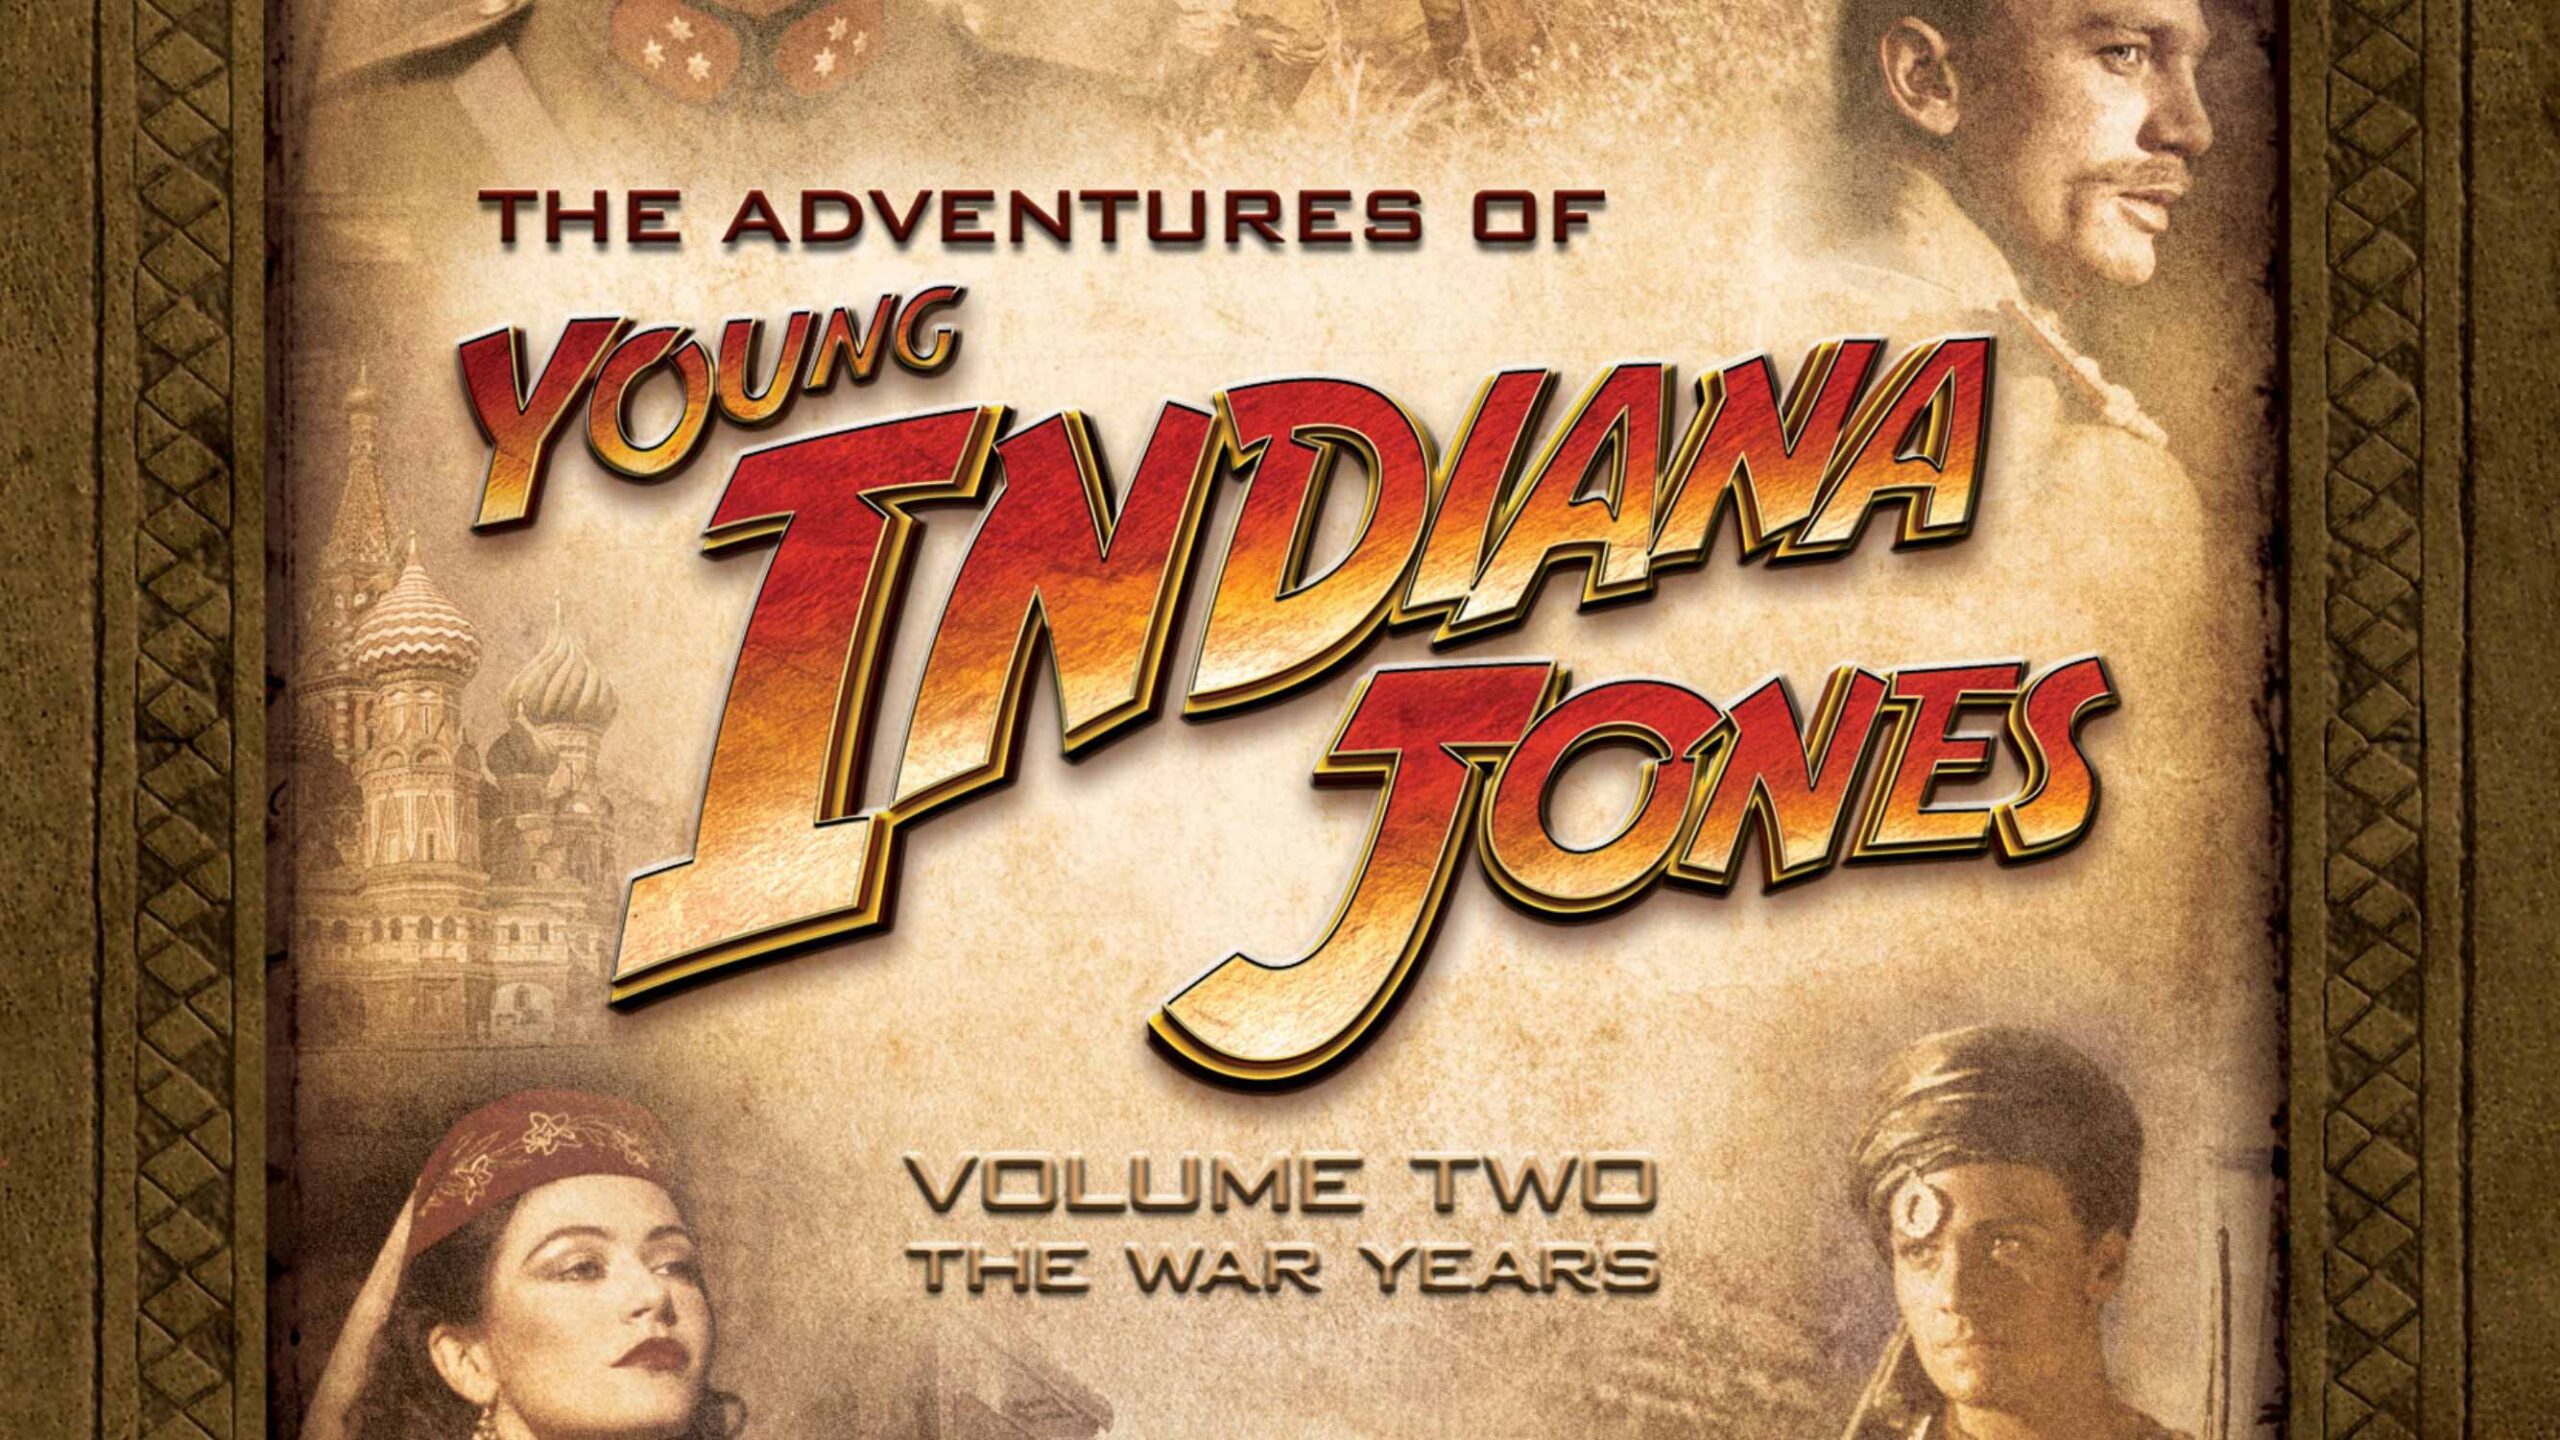 Complete Indiana Jones Movie Timeline